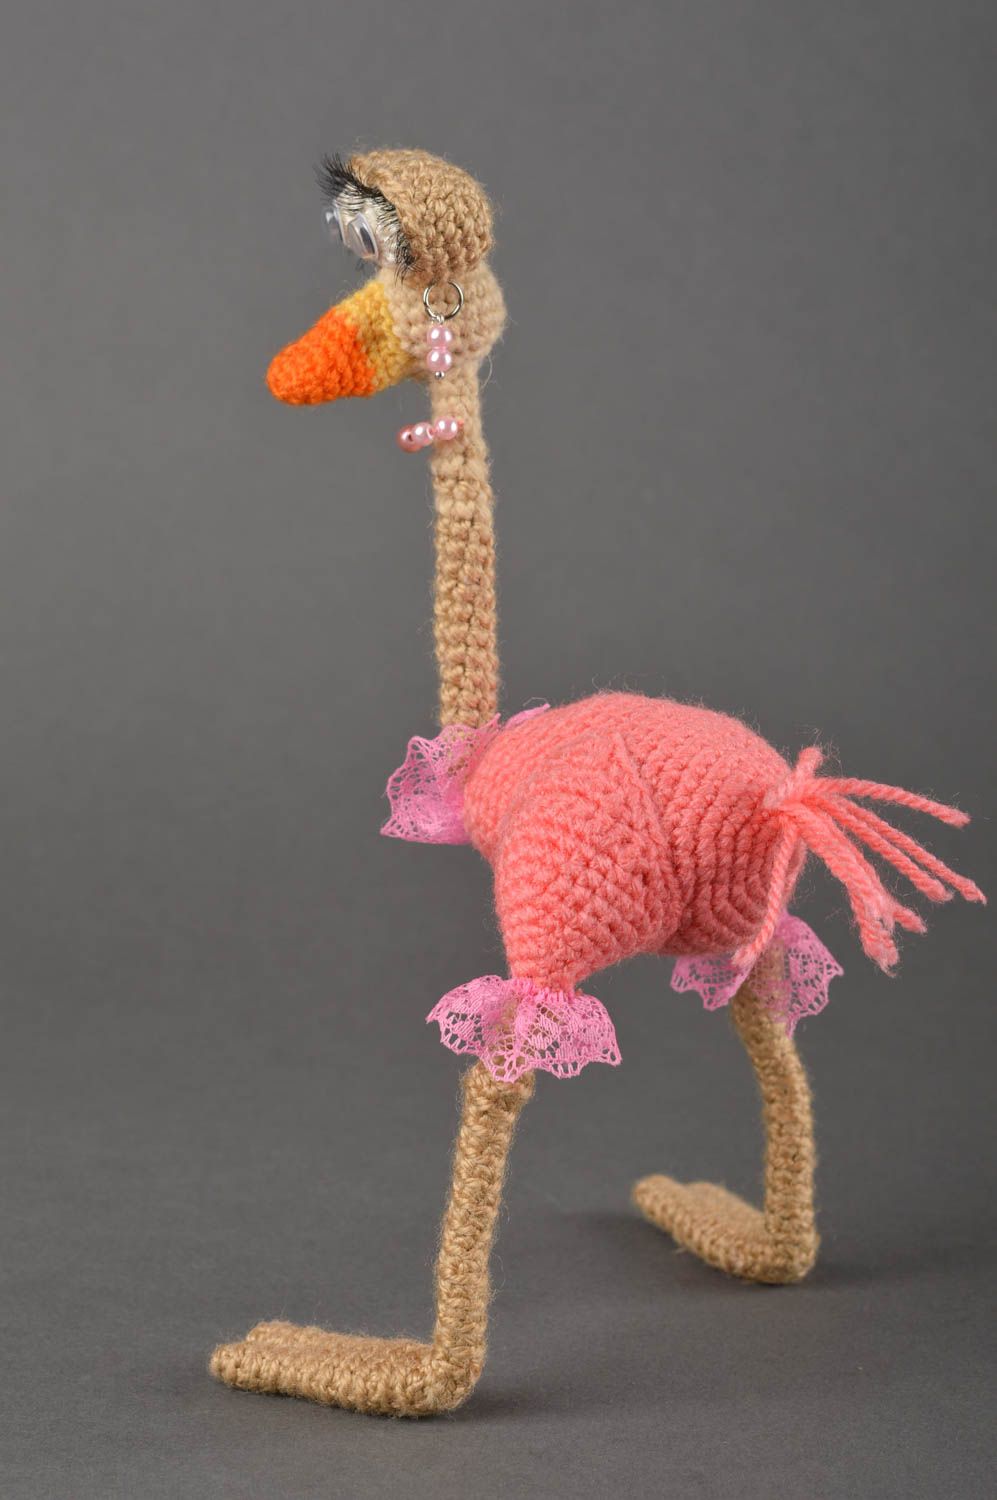 Hand-crocheted creative toy handmade elegant toy for babies nursery decor photo 3